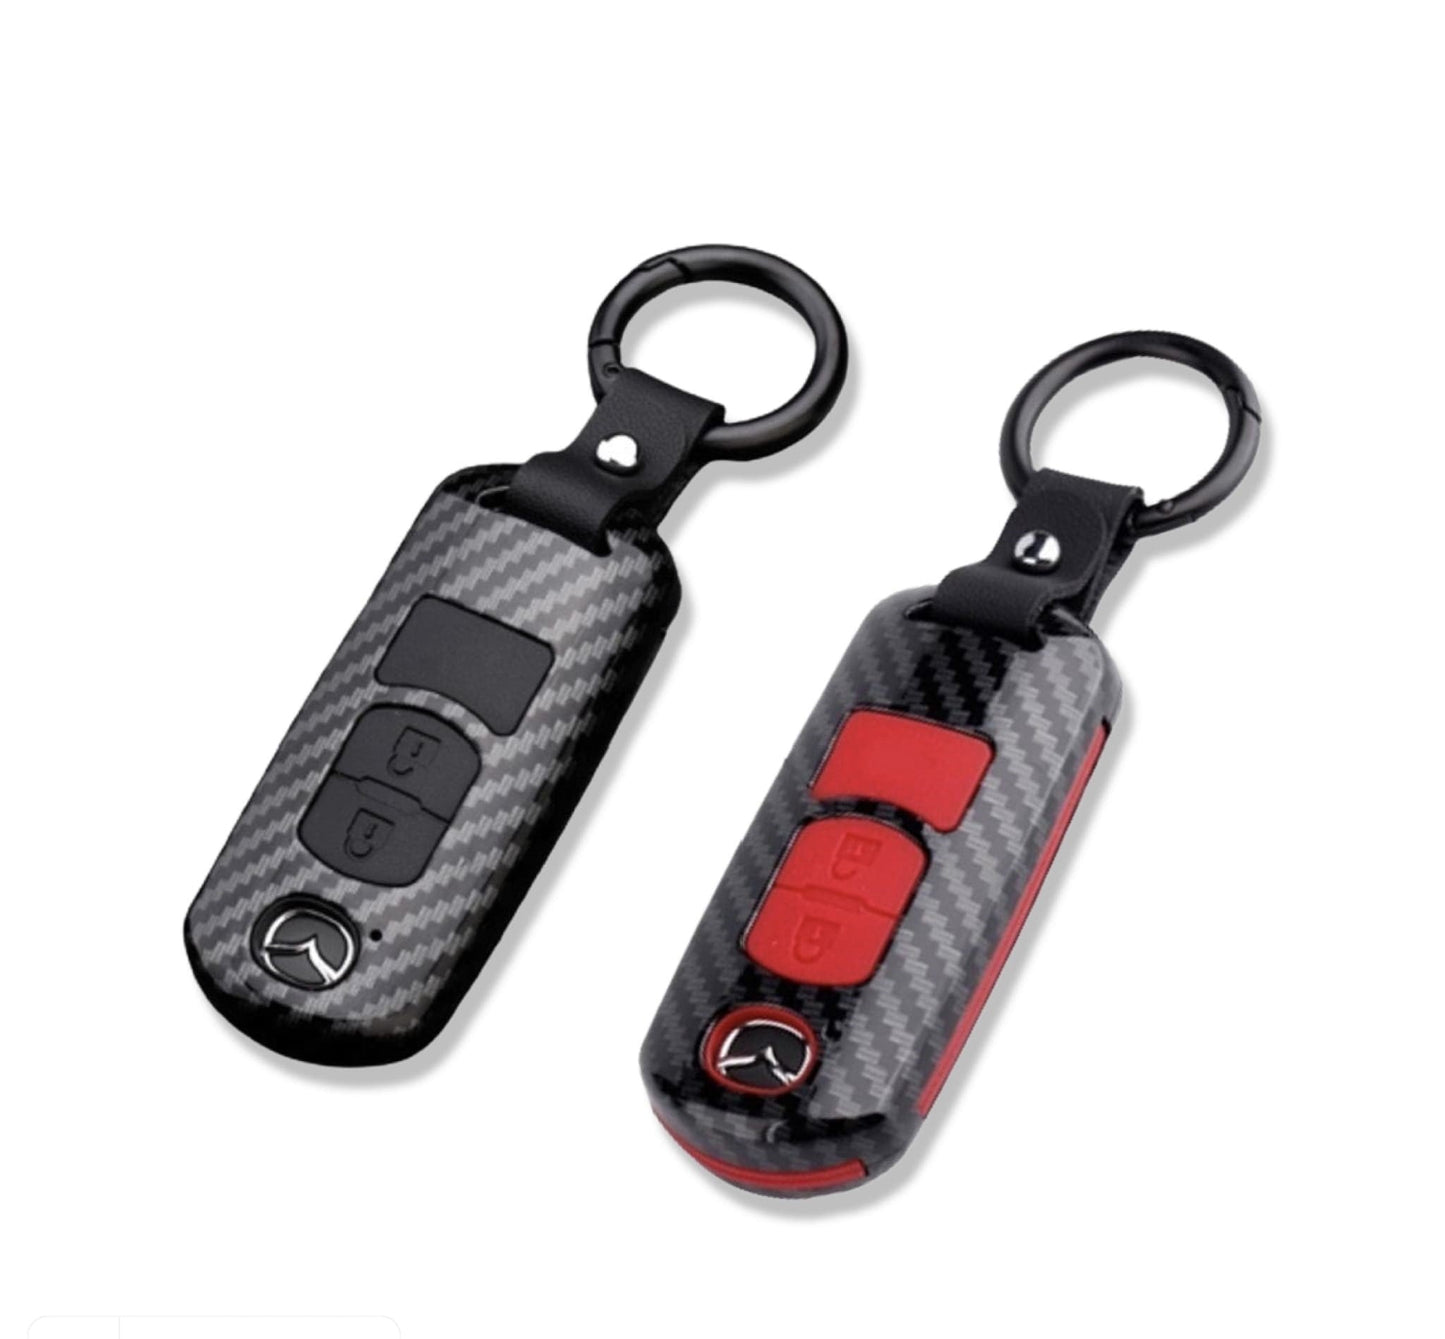 Mazda key cover | Mazda 3, 2, 6, CX-3, CX-5 car key cover | Carbon fibre design | Mazda Accessories - Keysleeves